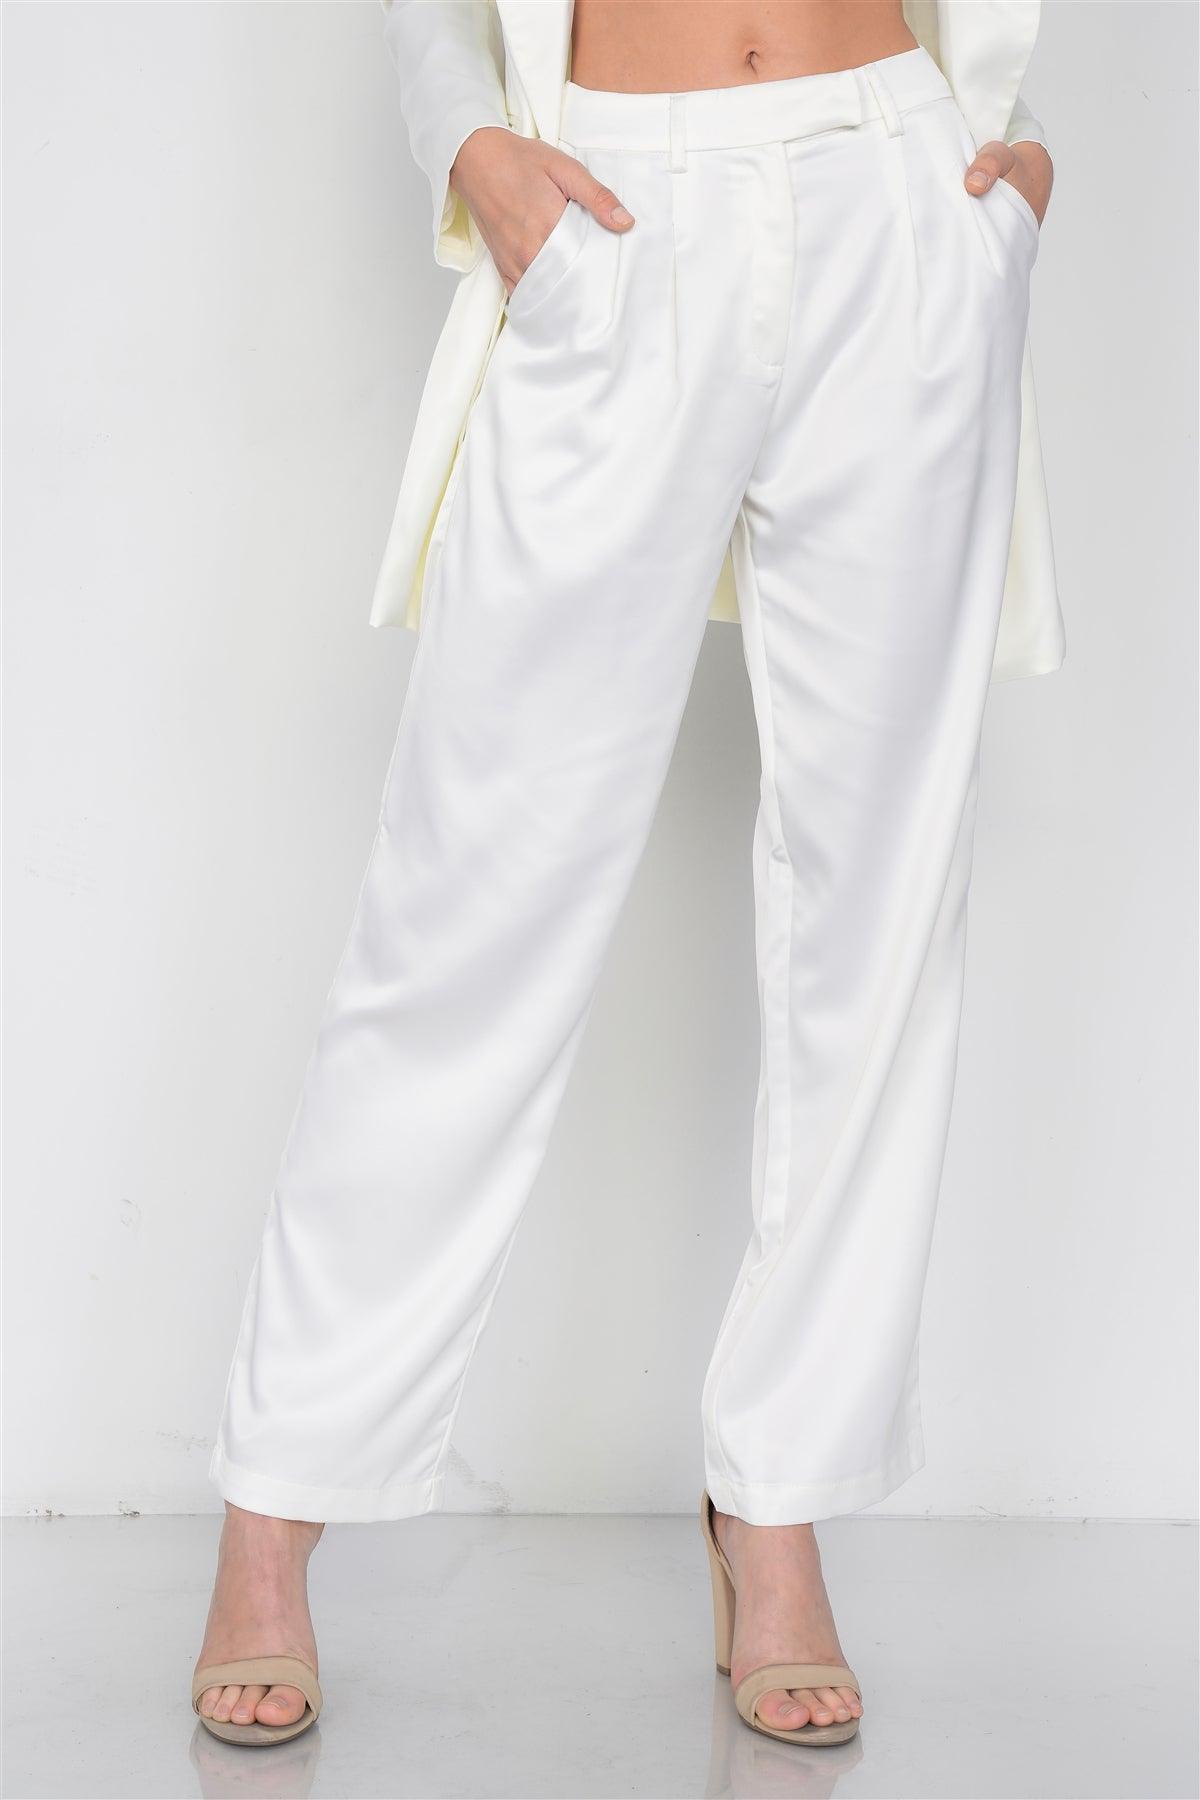 Ivory Silk Boyfriend Blazer & Chic High-Waist Pleated Ankle Pant Set   /3-2-1